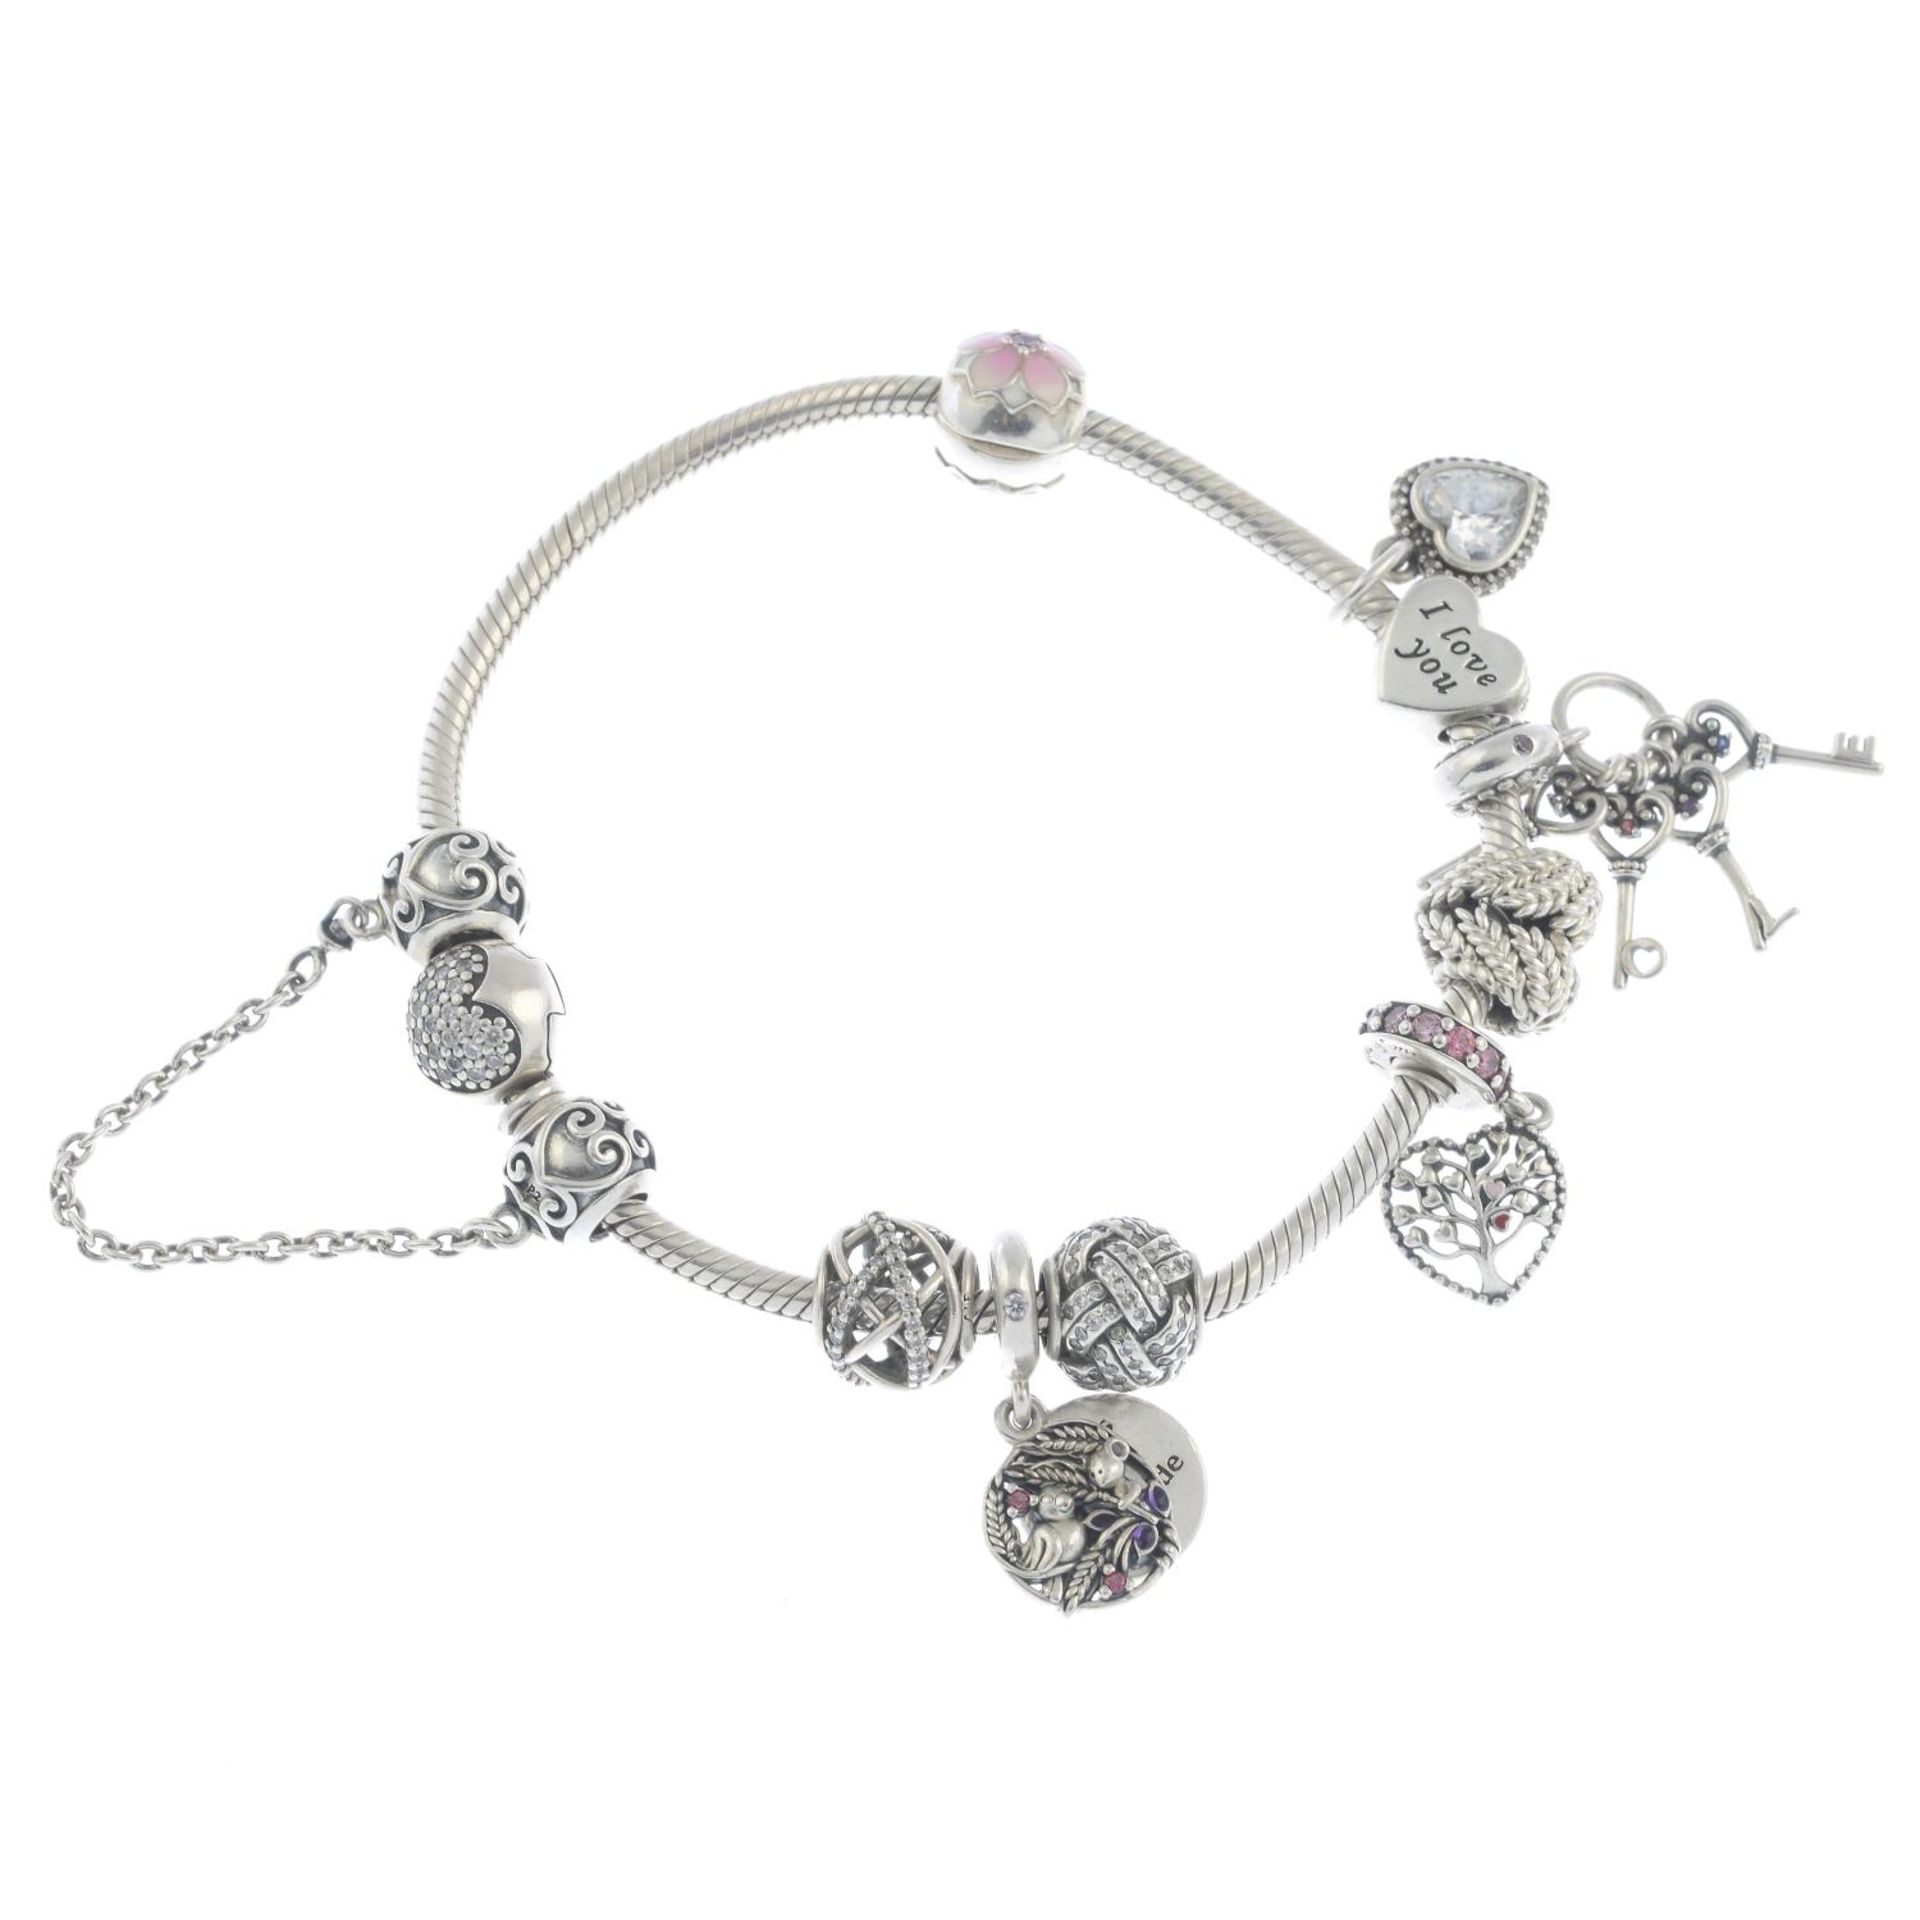 A silver charm bracelet,